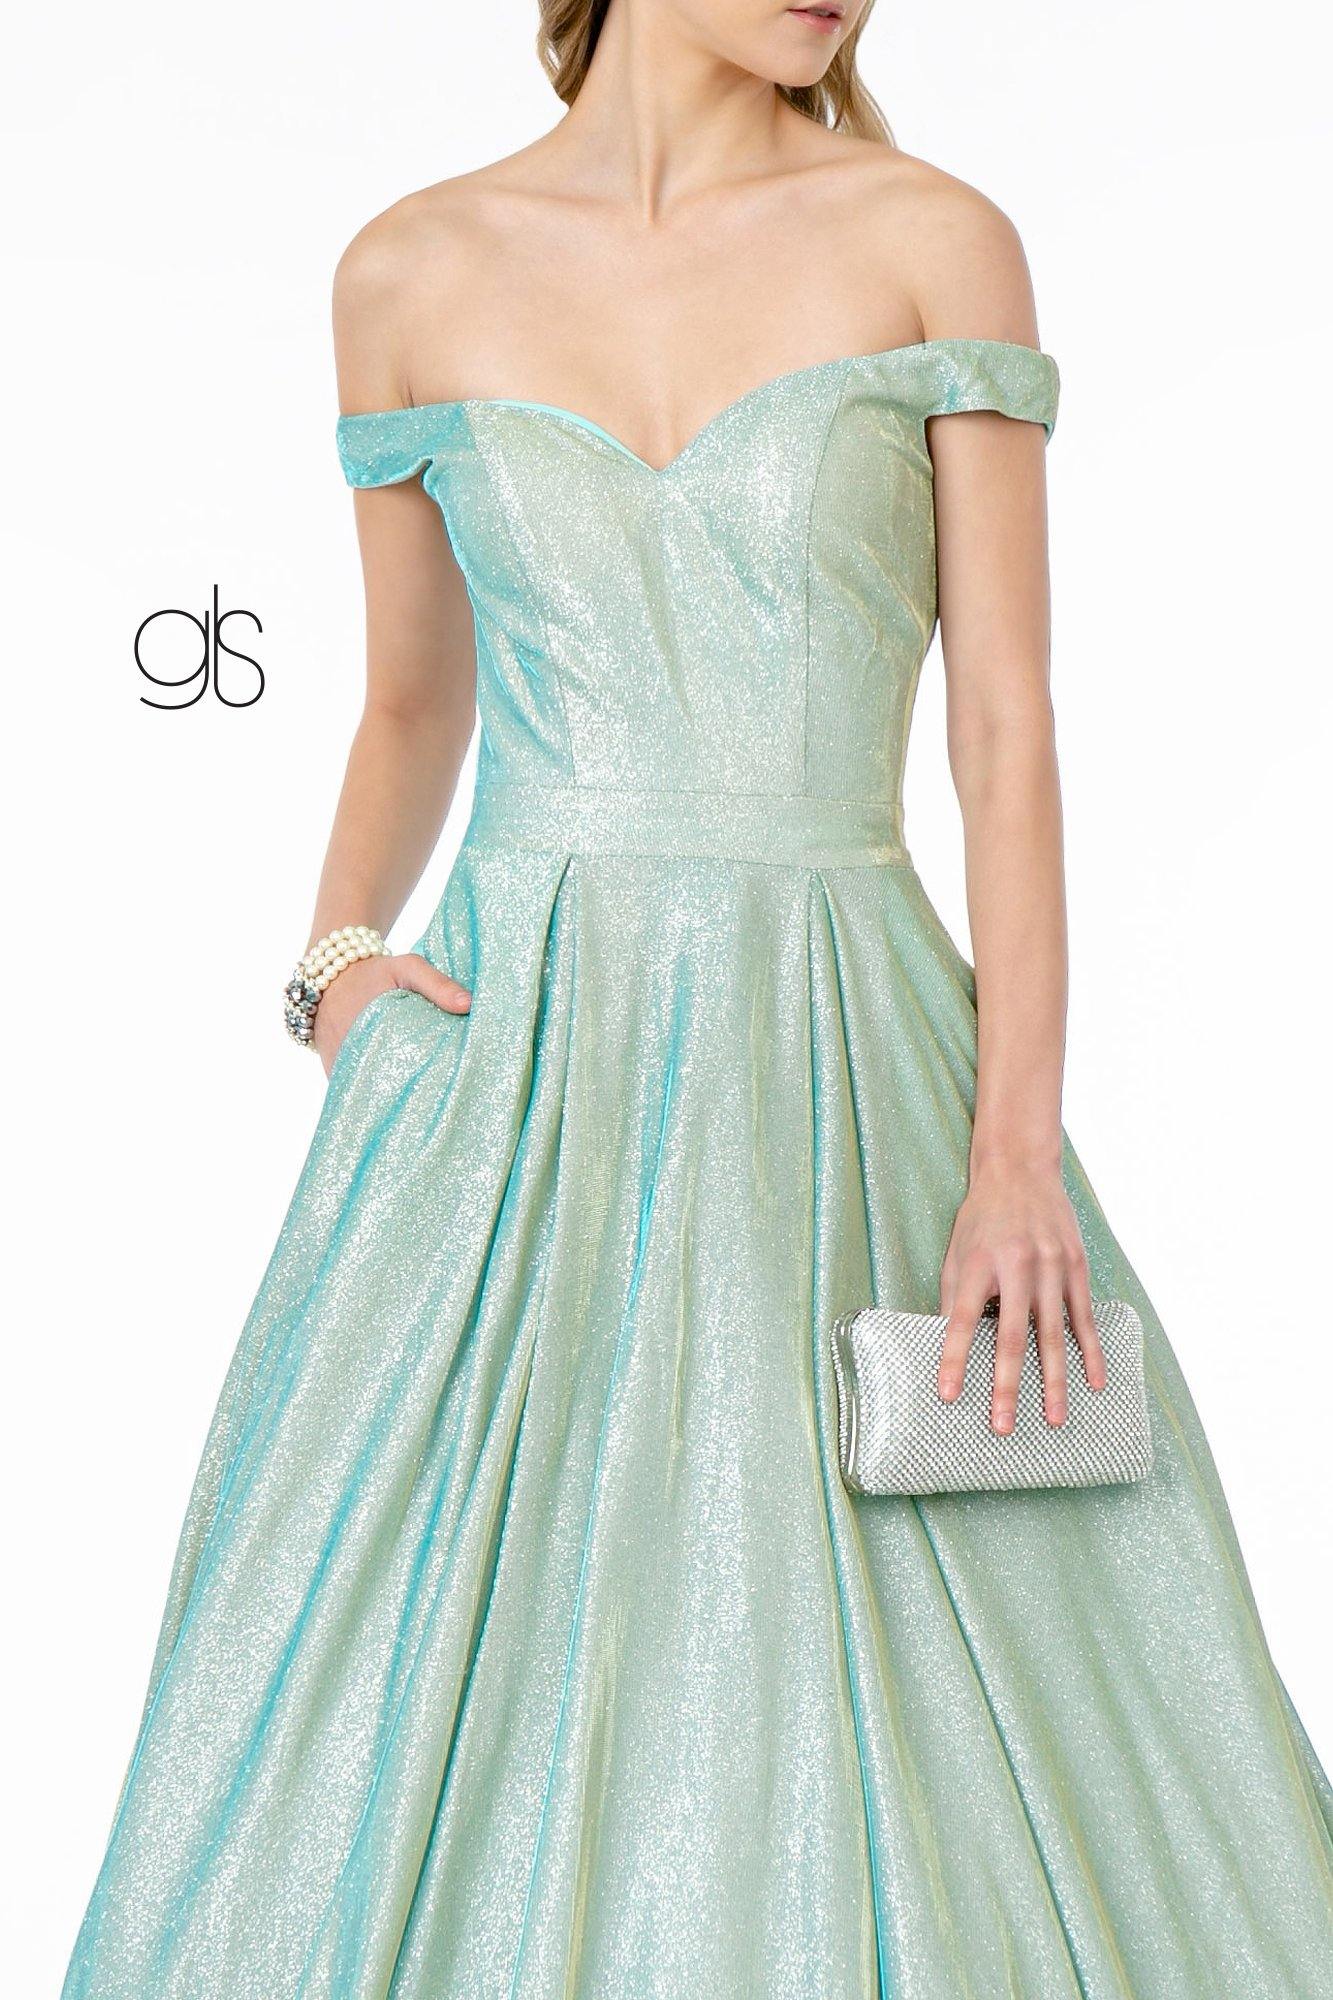 Cut-Away Shoulder Prom Dress Ball Gown - The Dress Outlet Elizabeth K